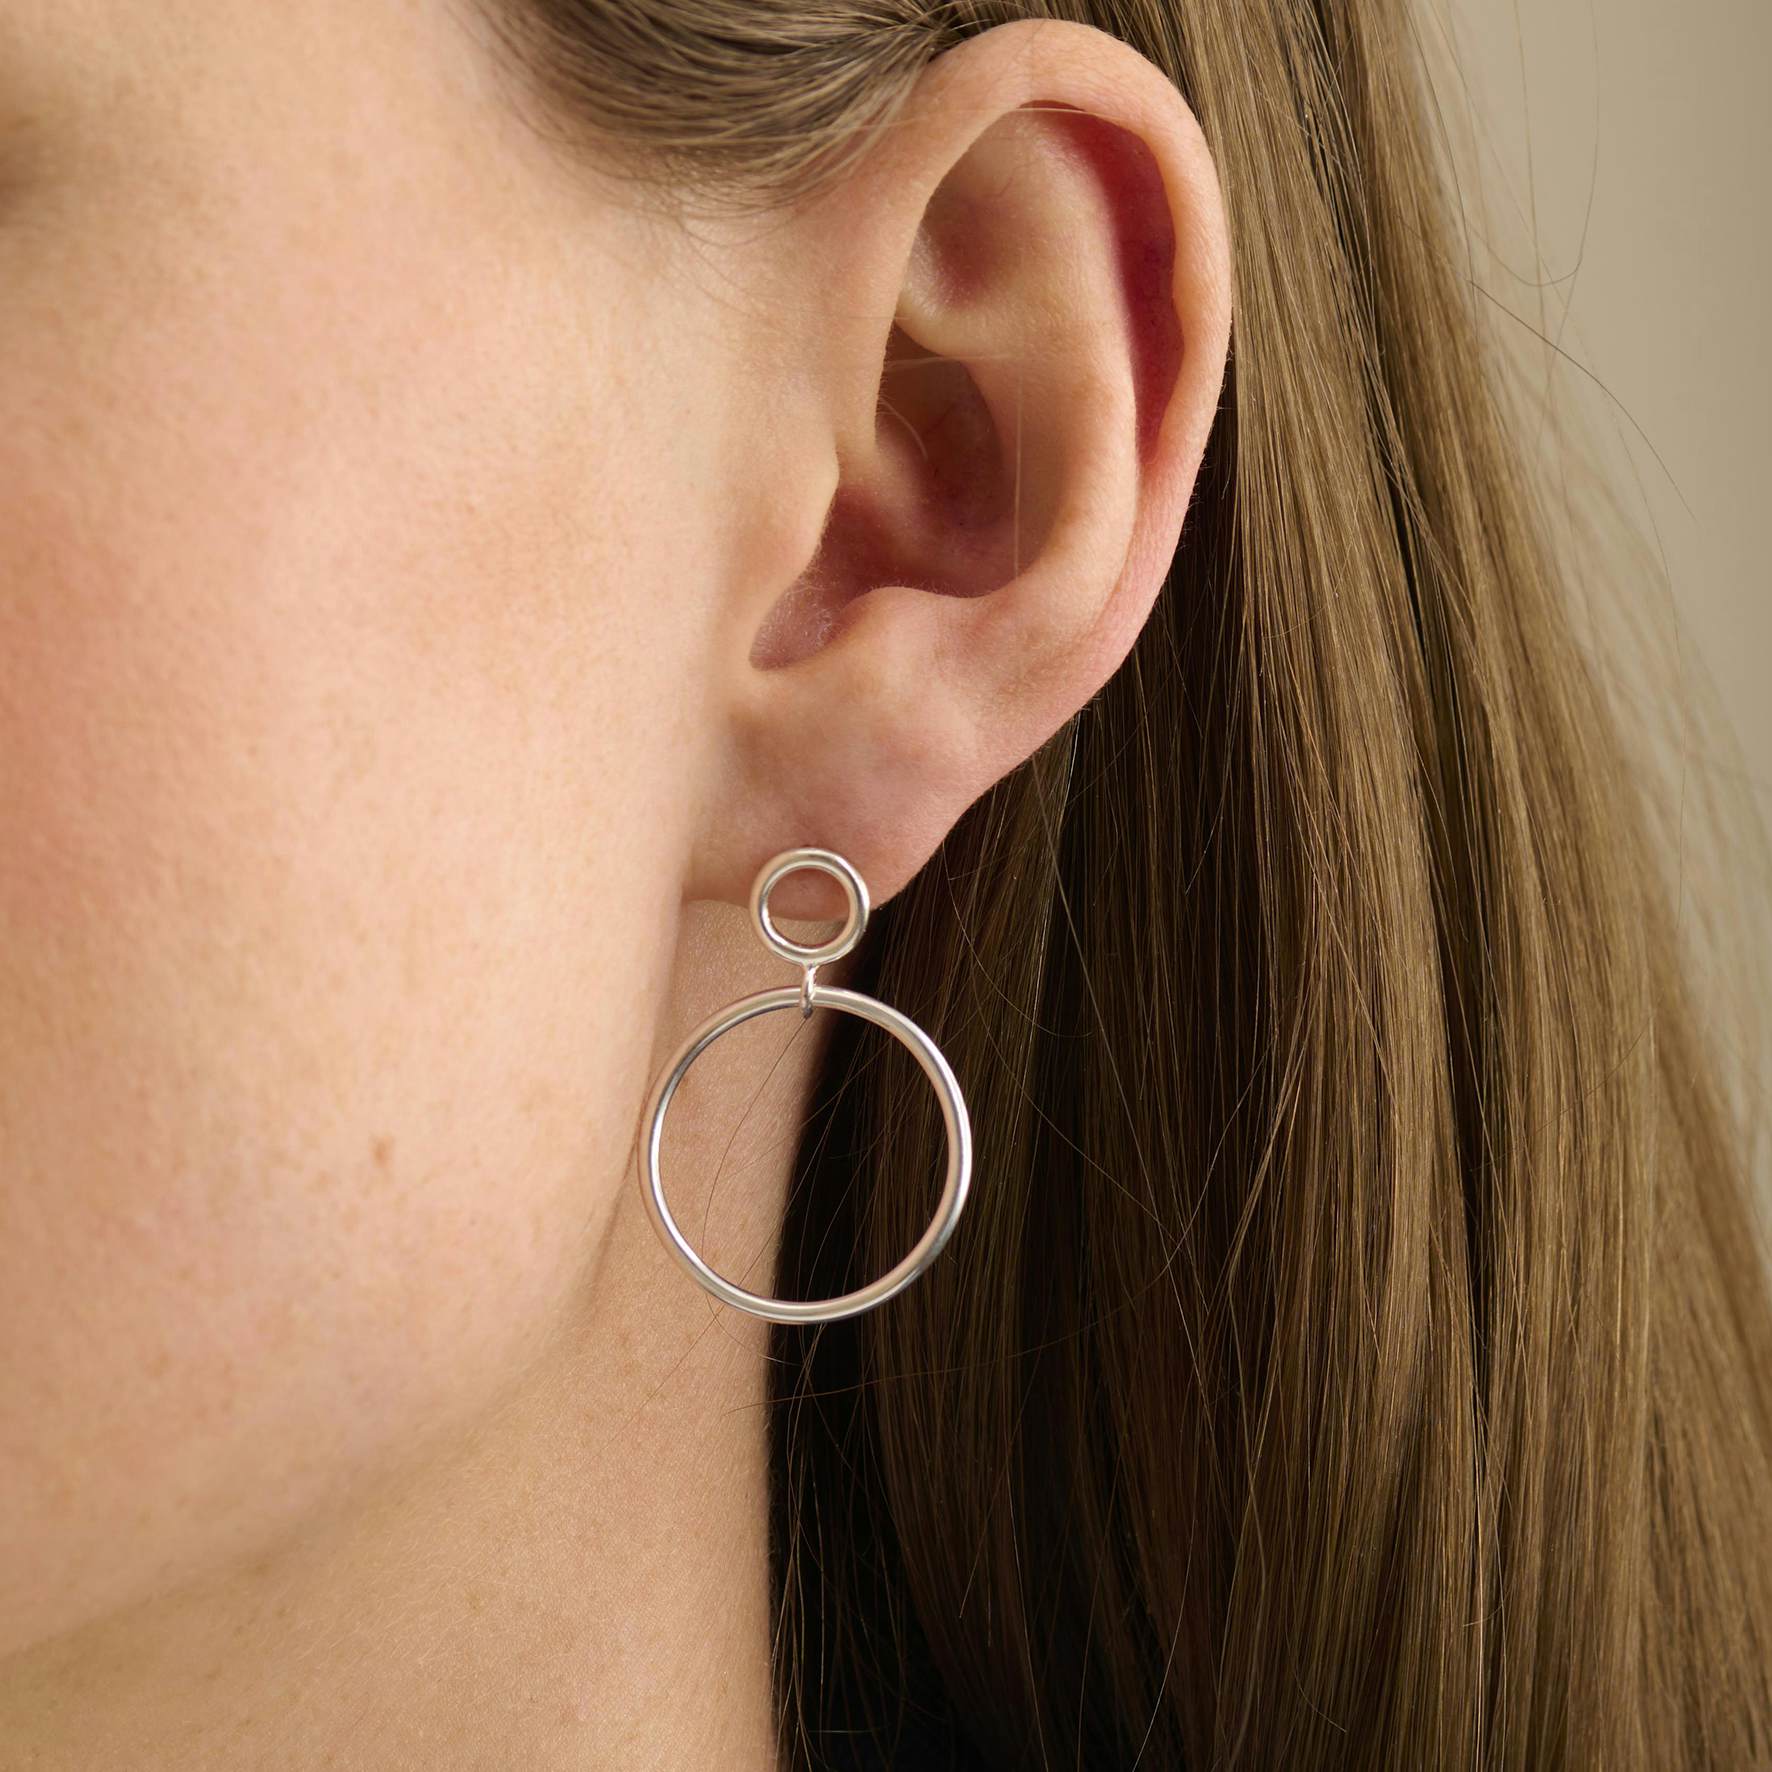 Globe Earrings from Pernille Corydon in Goldplated-Silver Sterling 925